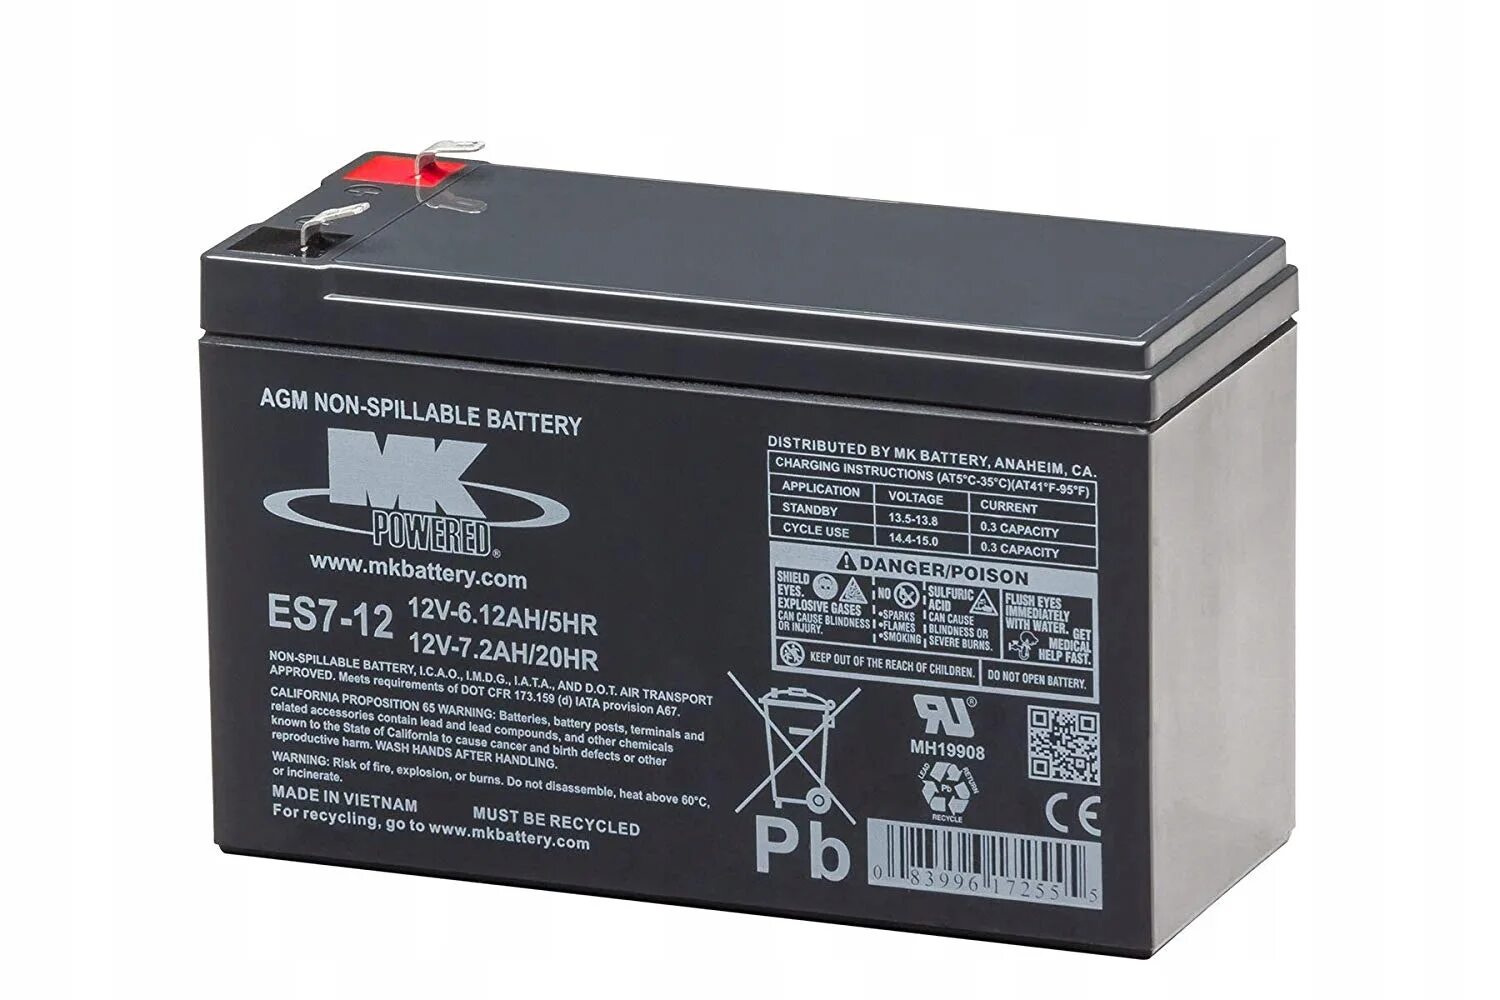 Agm 12v 7ah. Ms7-12 12v7ah/20hr. Аккумуляторная батарея DTS 1207 - Sealed lead acid Battery-12v 7ah. Гелевый аккумулятор 12v 7ah. Аккумулятор 12v 7.2Ah djw12-7.2.